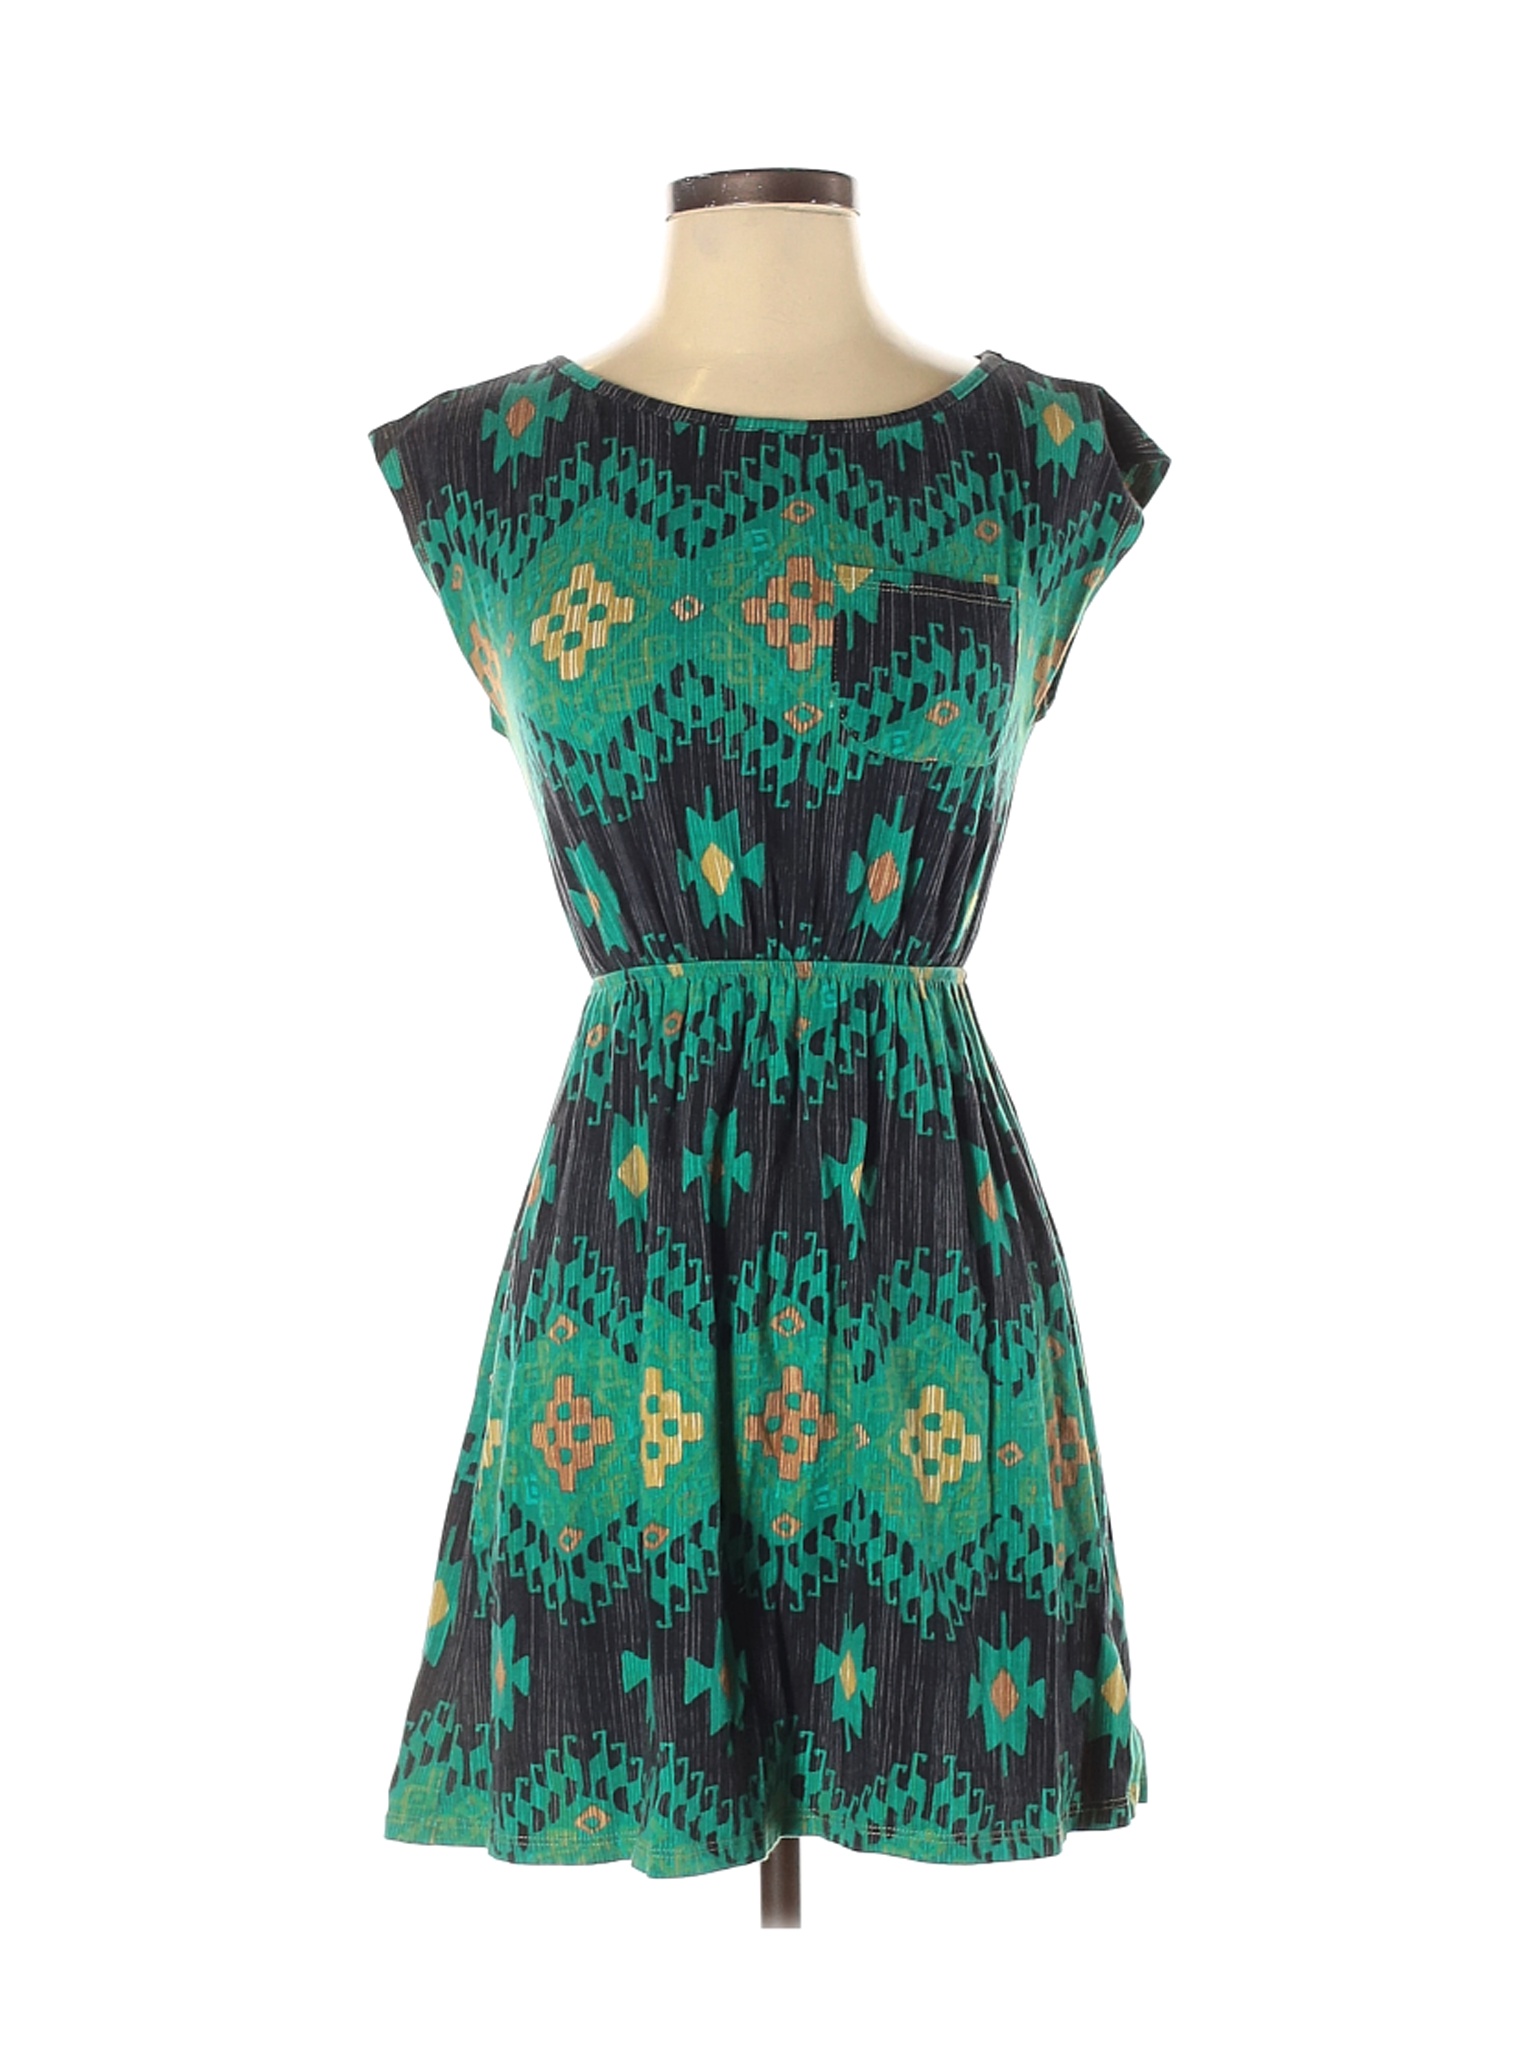 Lily White Women Green Casual Dress S | eBay